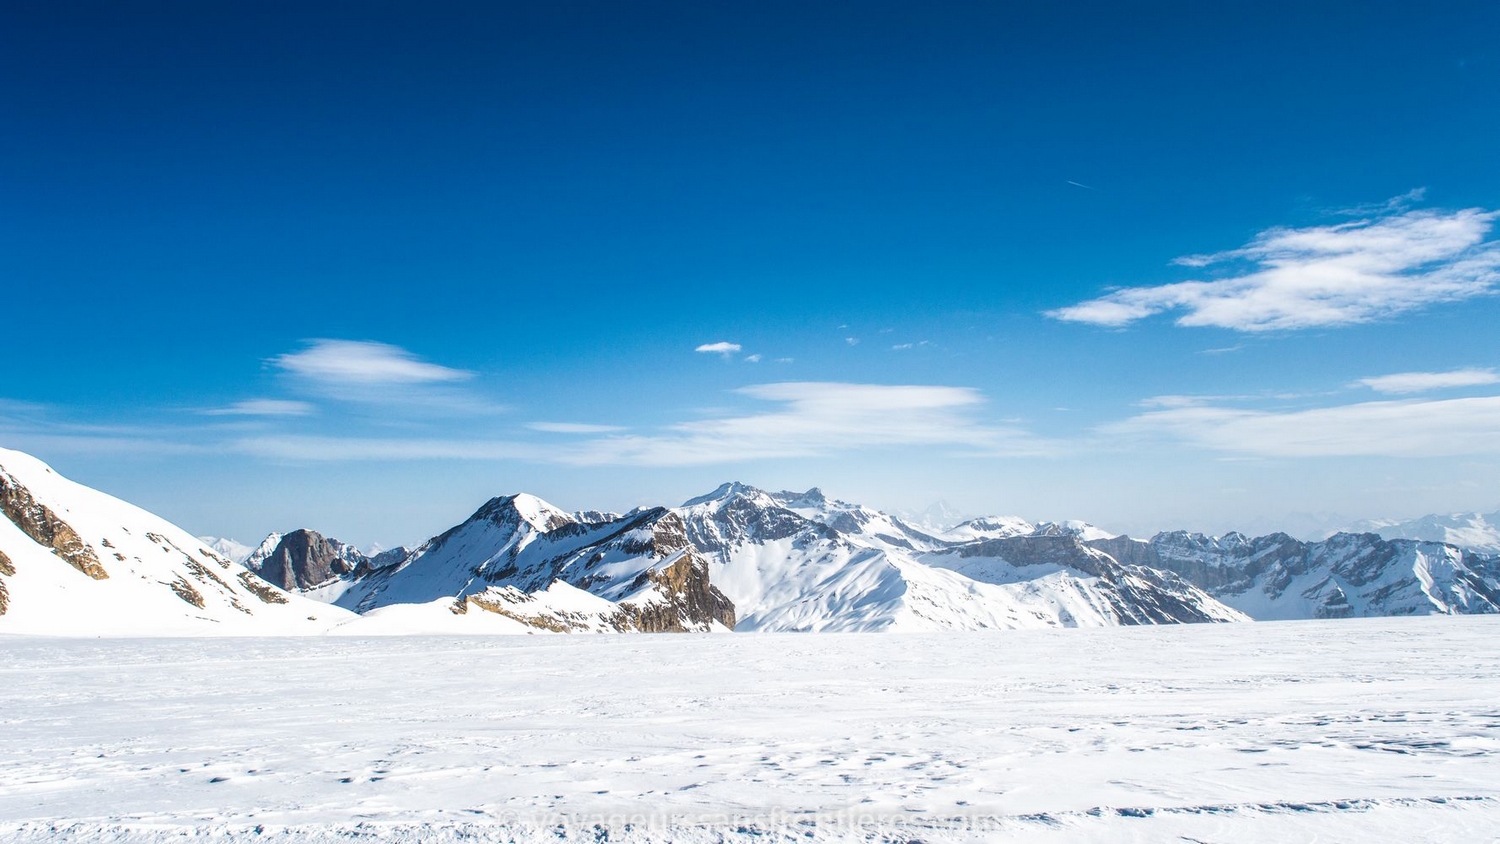 Beautiful snowy mountains - Glacier 3000, Switzerland